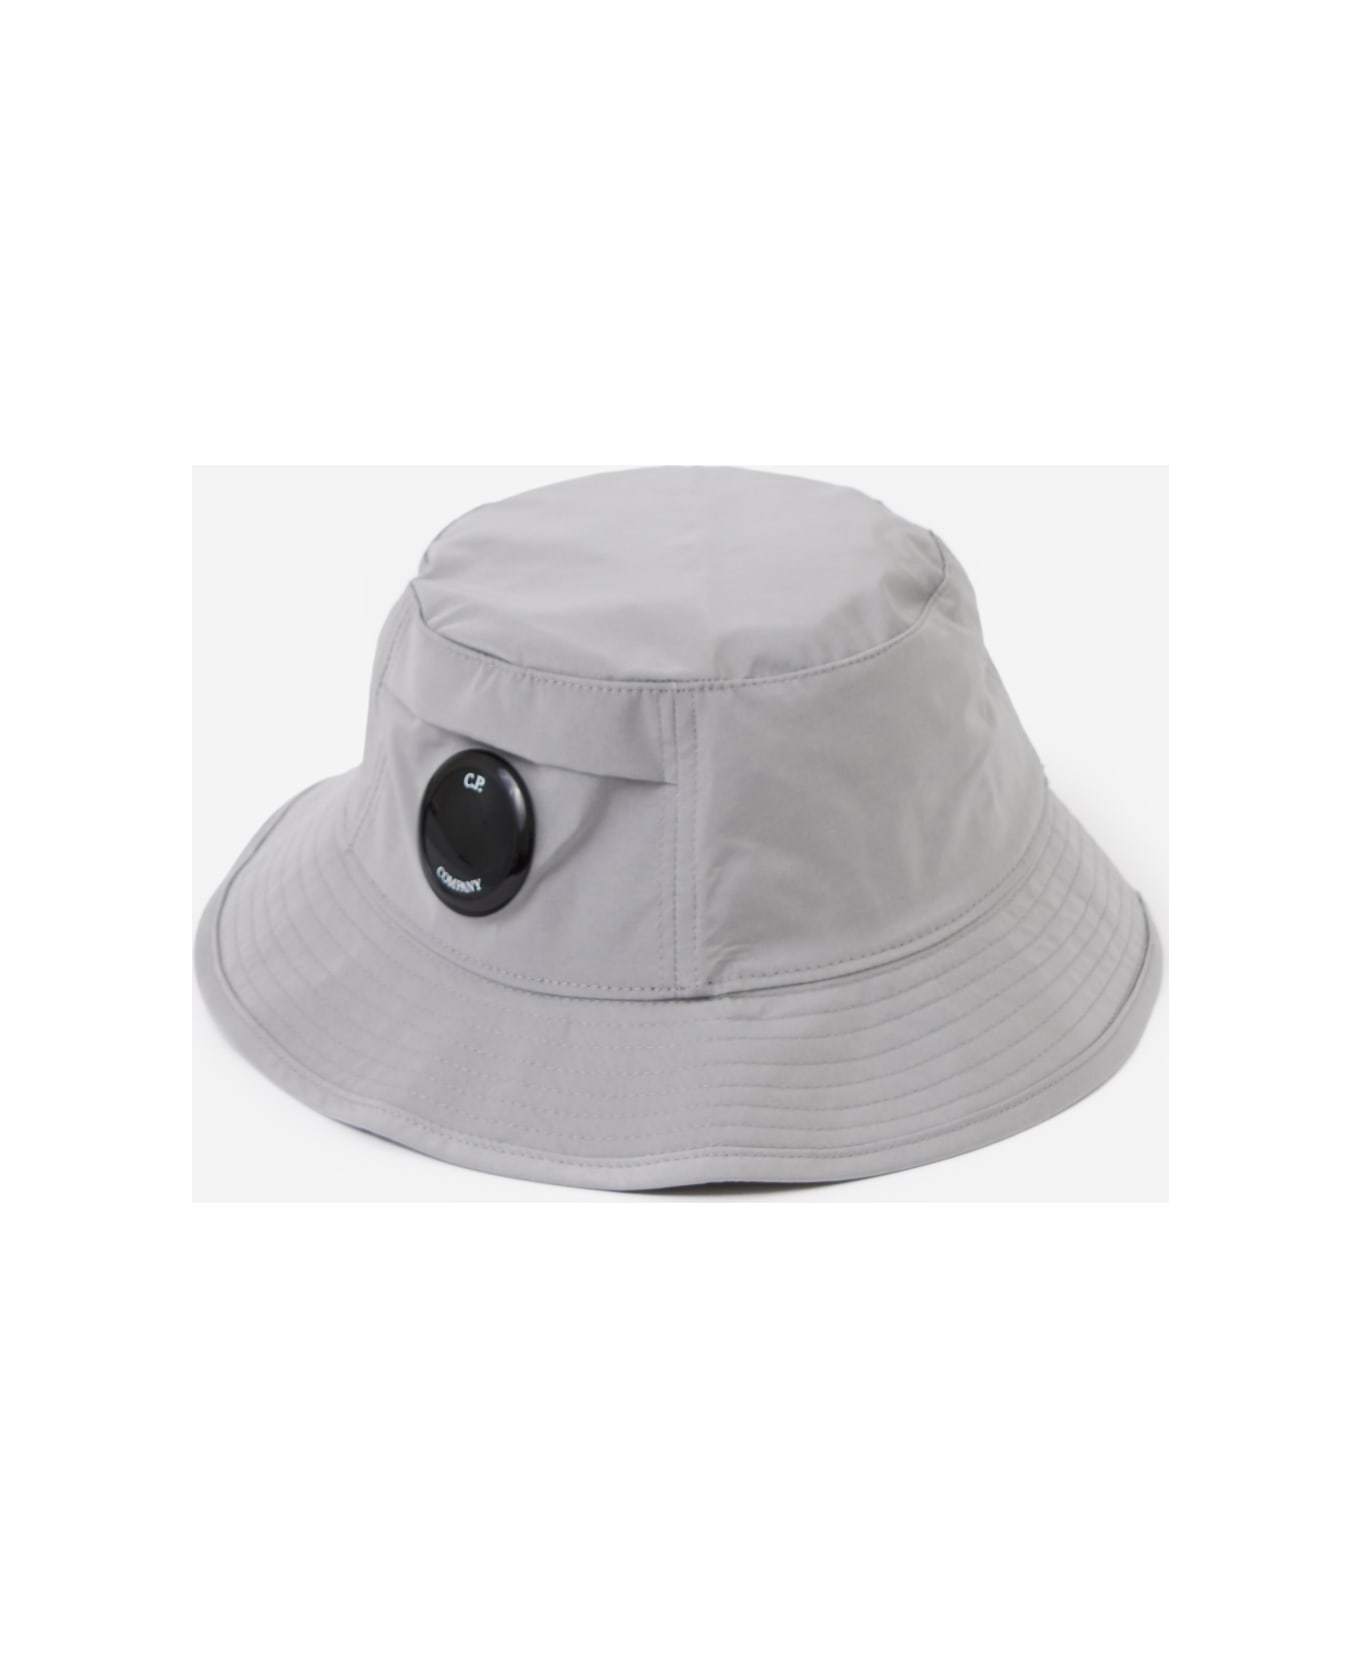 C.P. Company Hats - grey 帽子